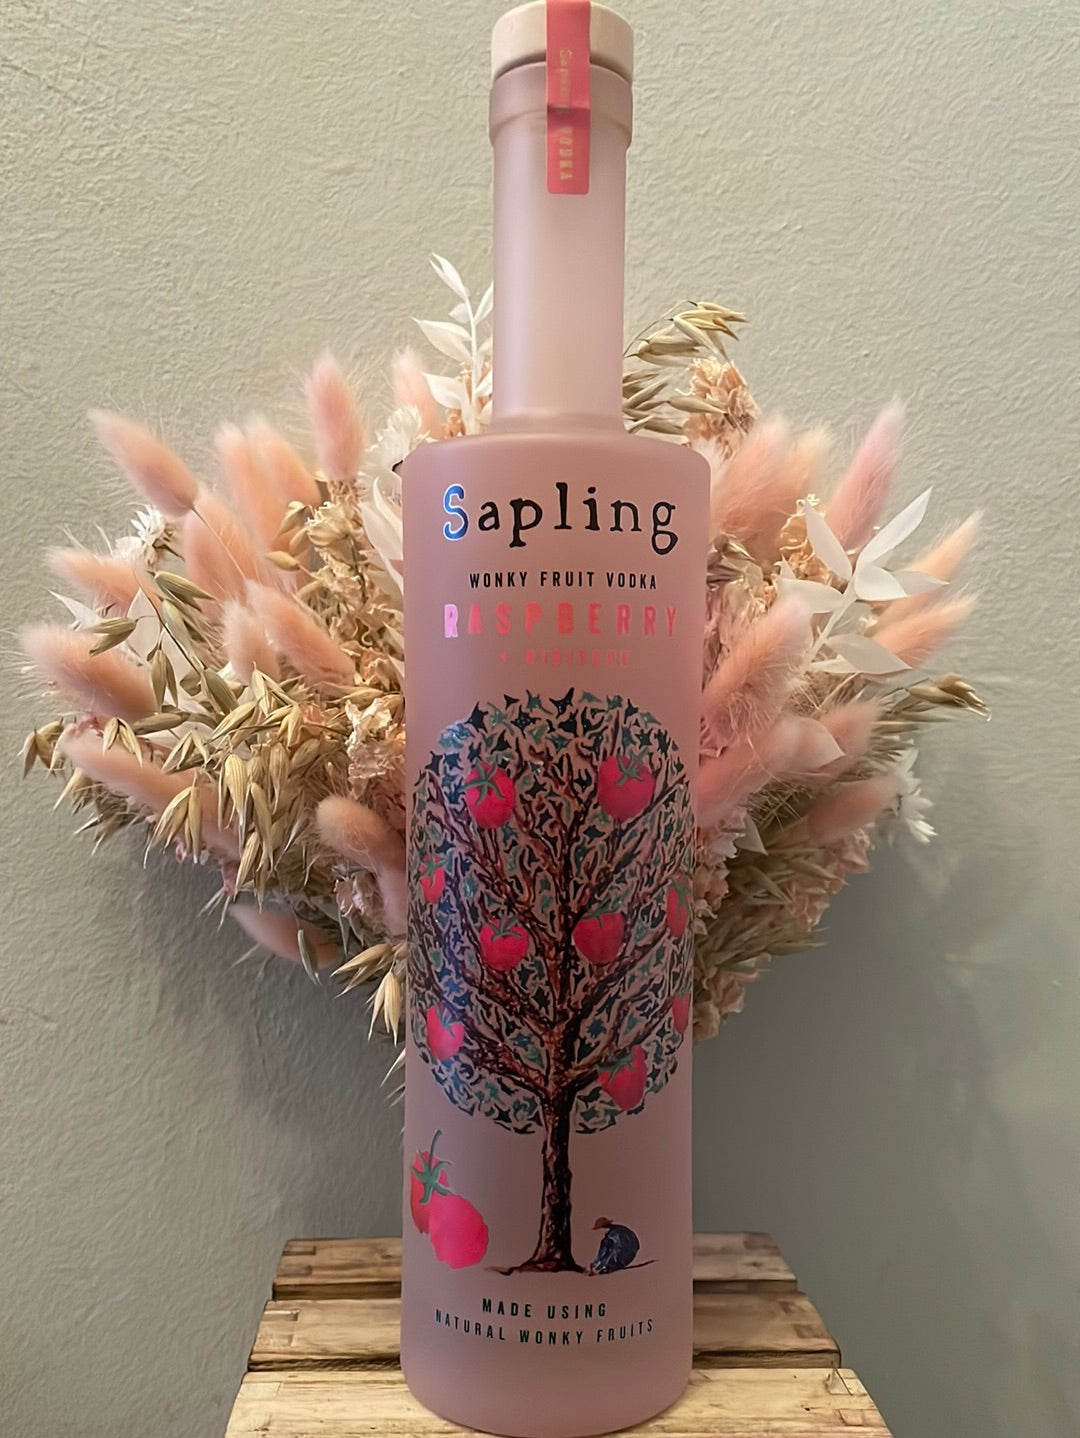 Sapling Raspberry & Hibiscus Vodka